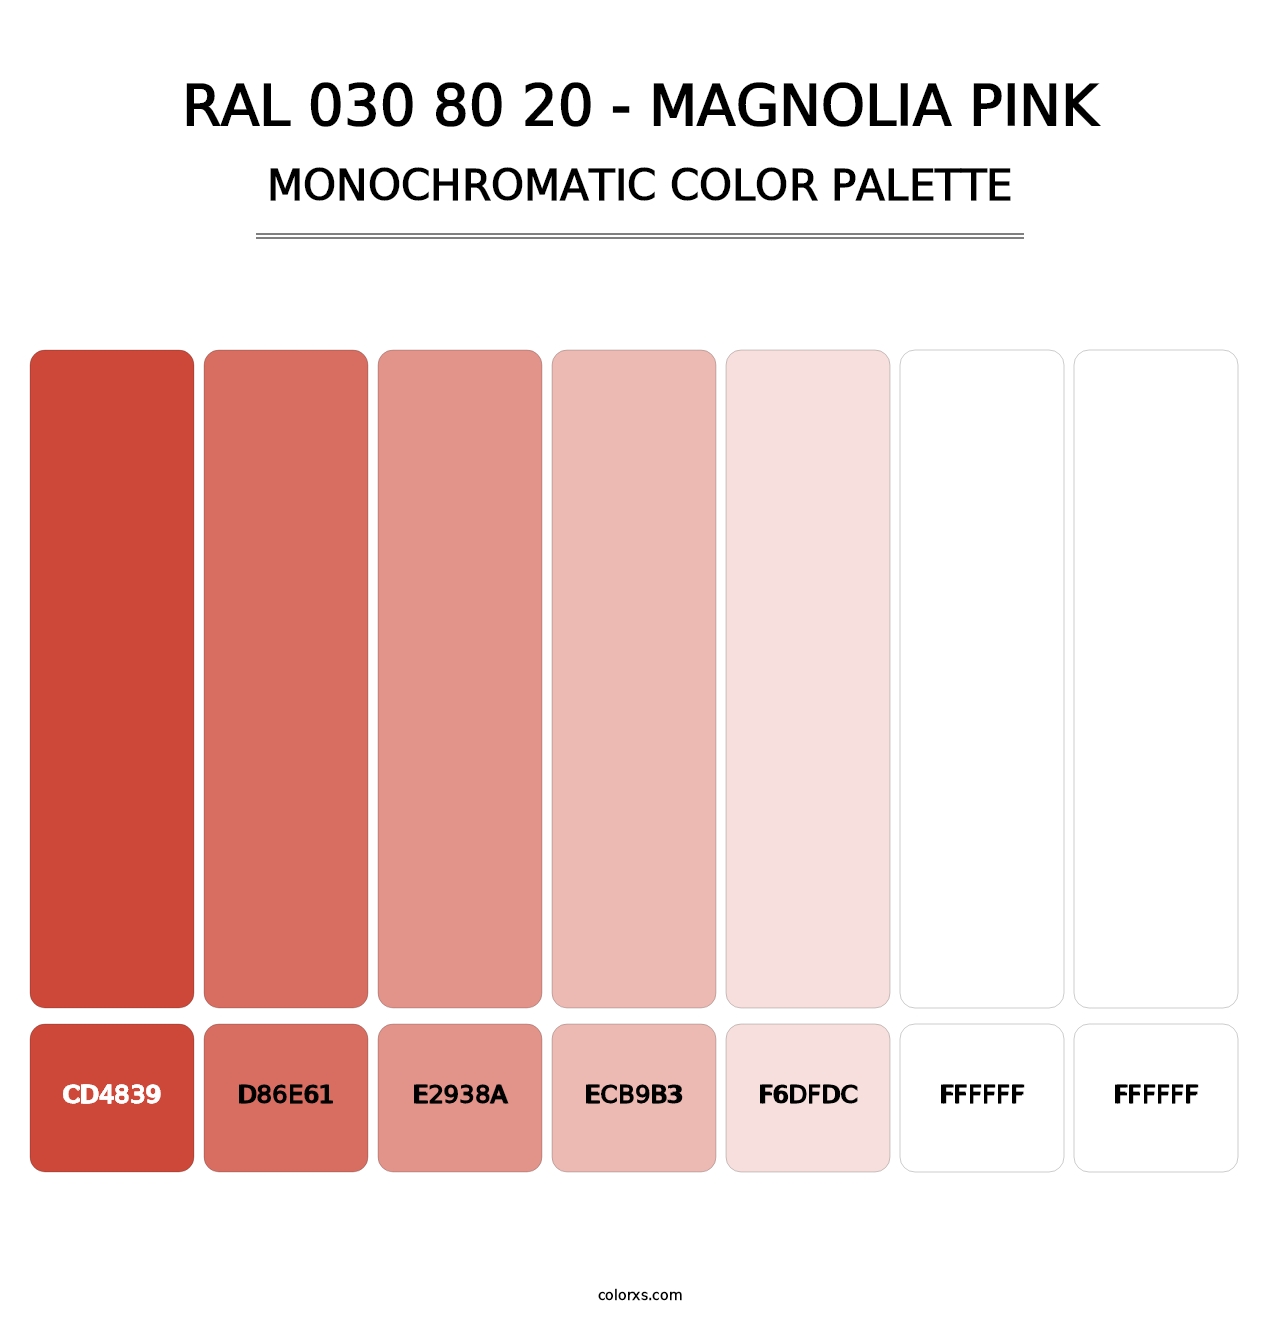 RAL 030 80 20 - Magnolia Pink - Monochromatic Color Palette